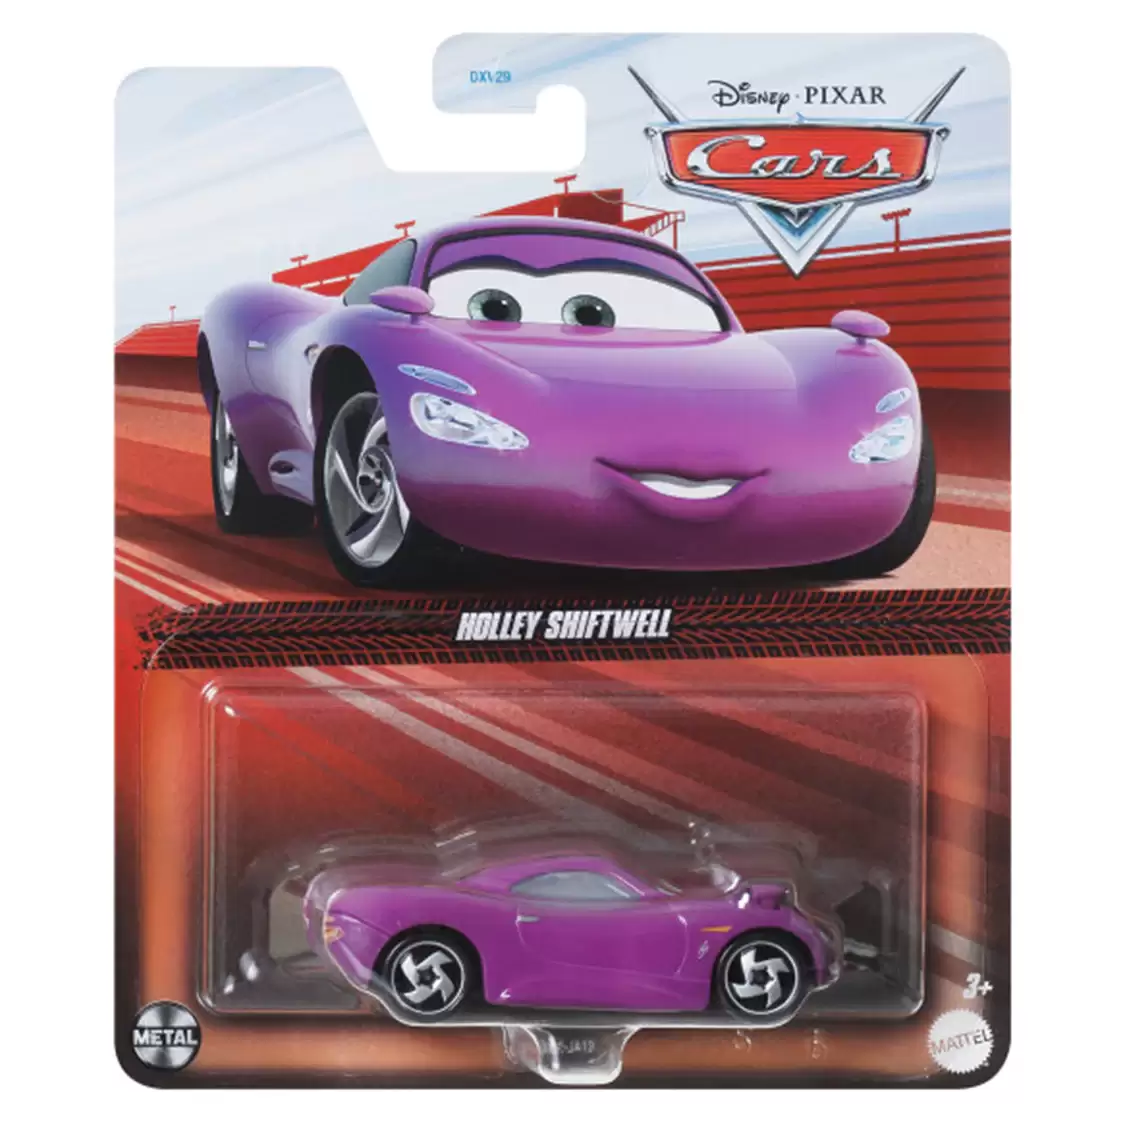 Pixar Cars - Holley Shiftwell